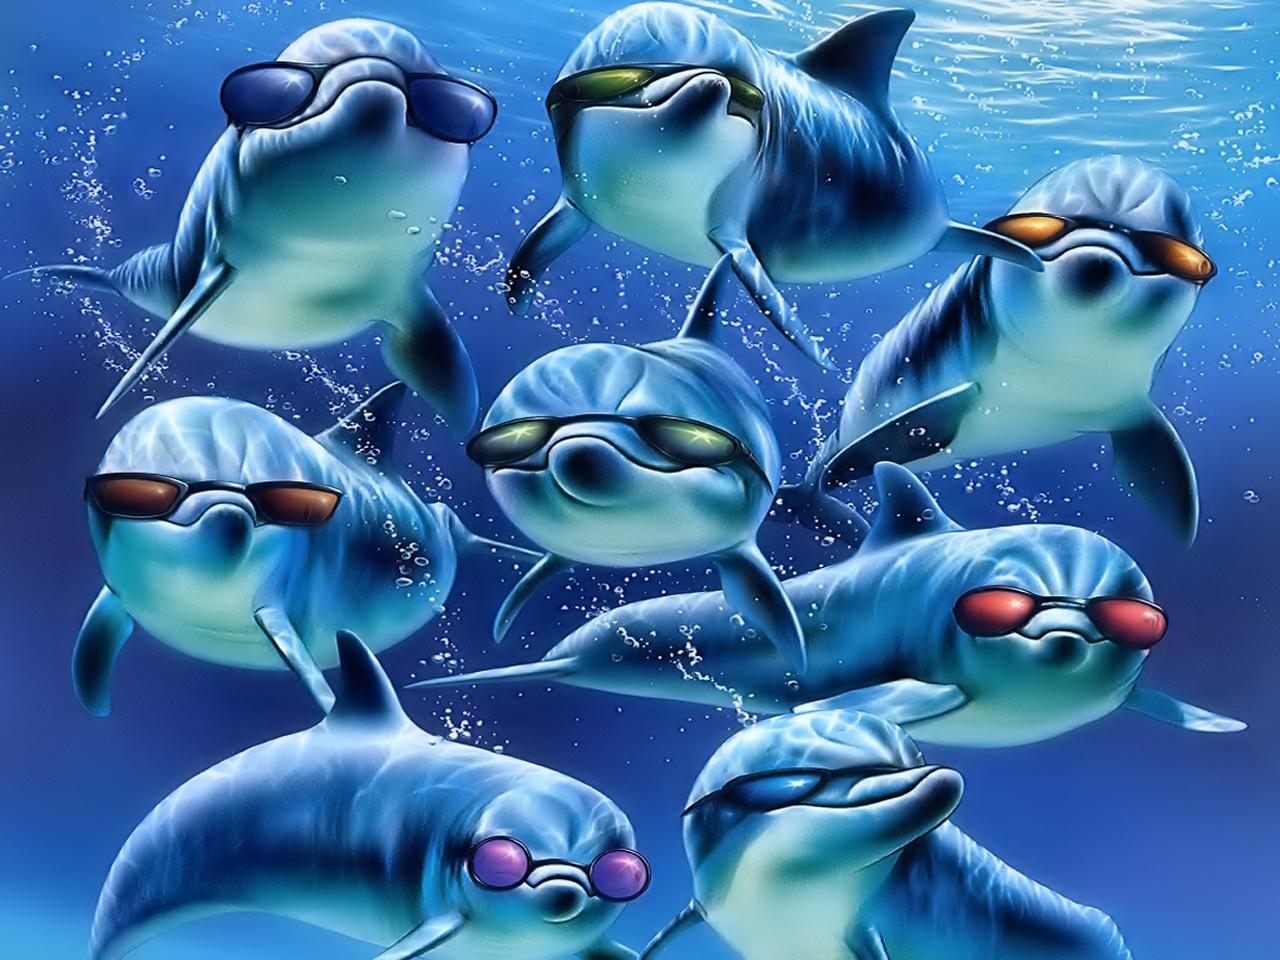 Dolphins free desktop background wallpaper image